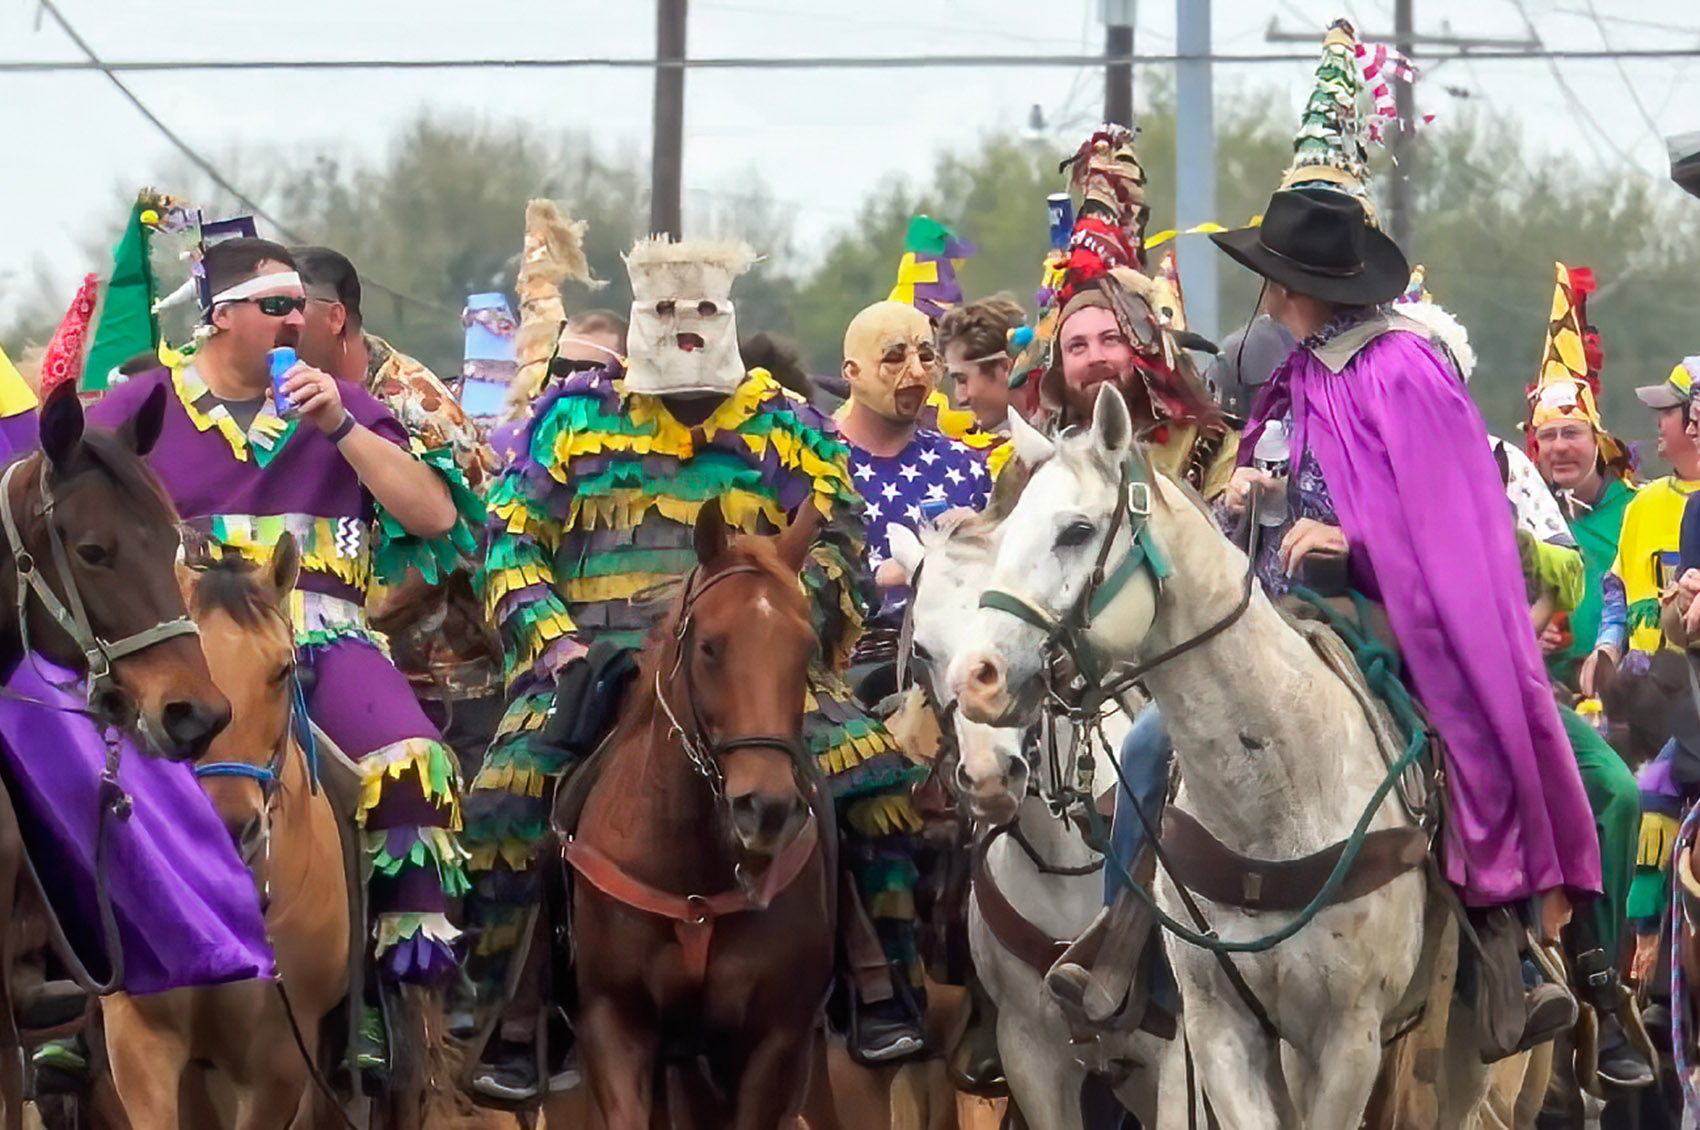 Mardi Gras riders on horseback celebrate in Mamou